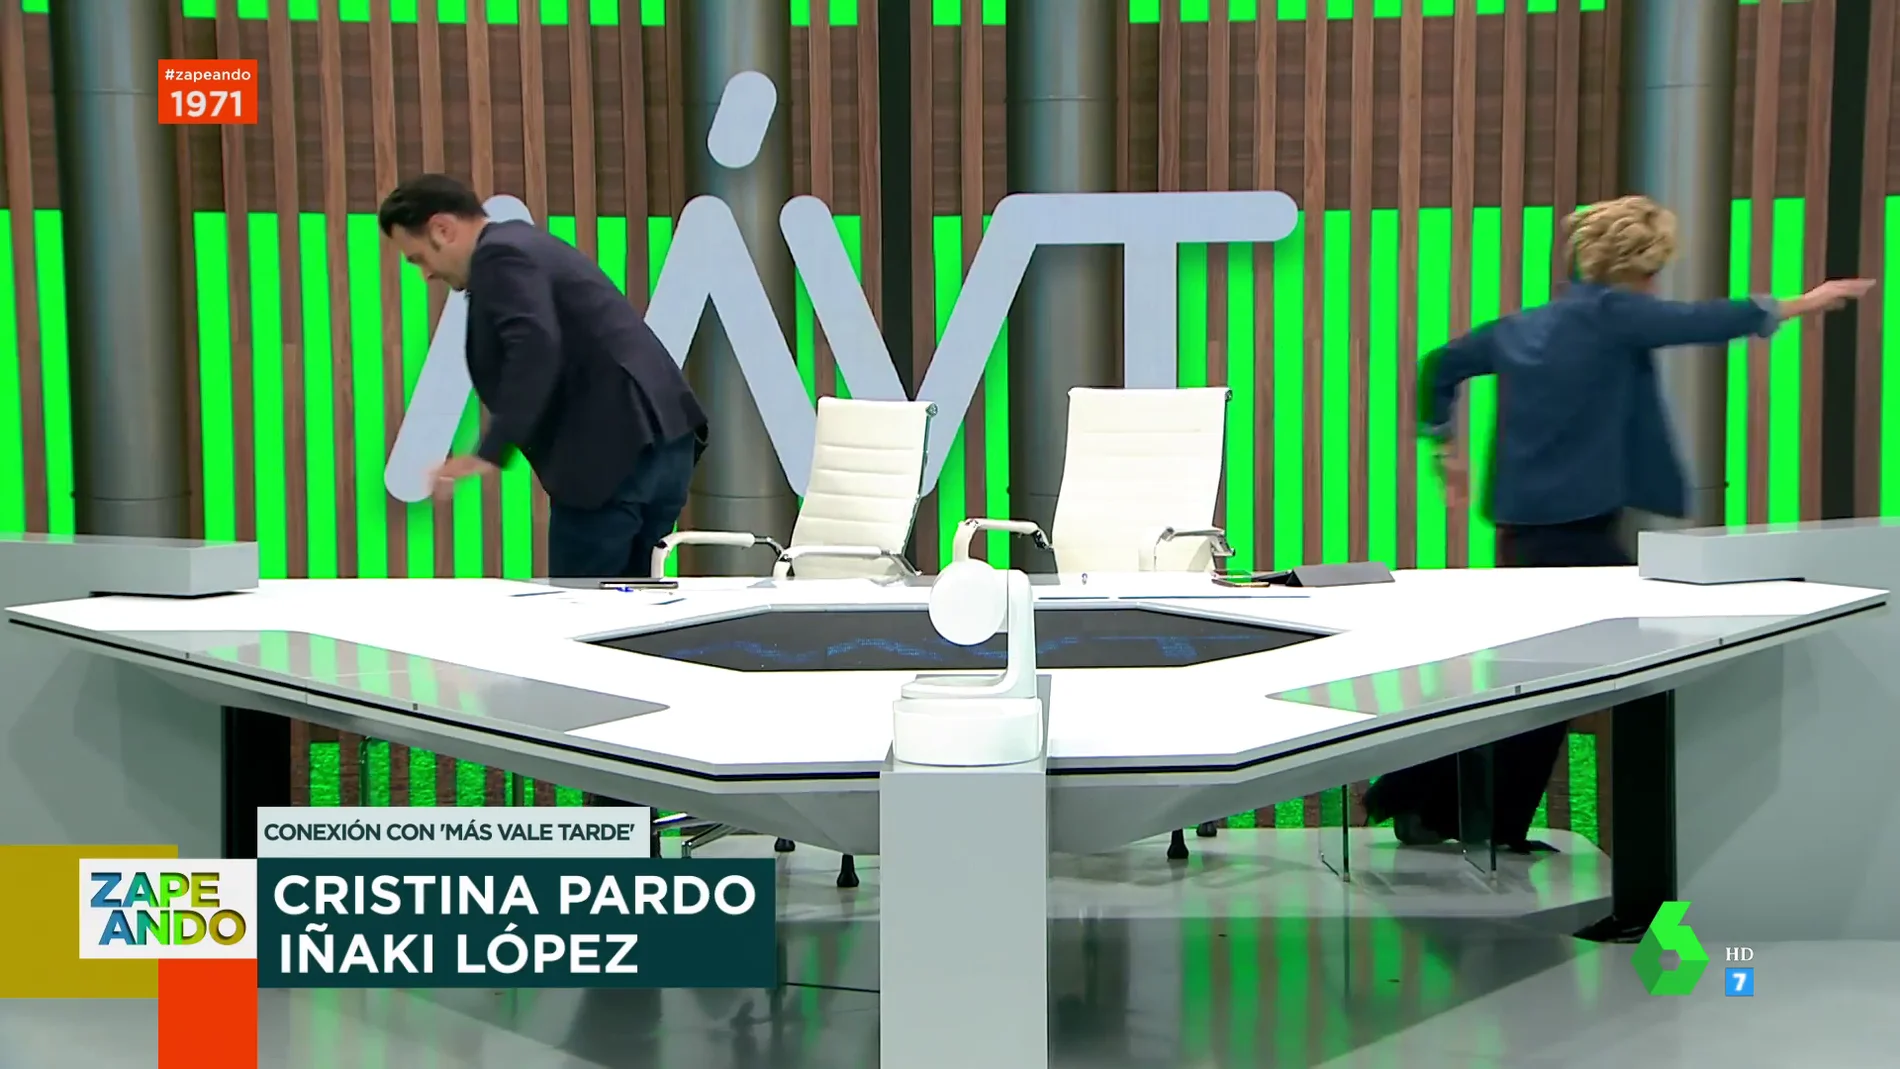 El tremendo susto de Cristina Pardo e Iñaki López fuera de cámaras en plató: "Casi nos da un infarto"